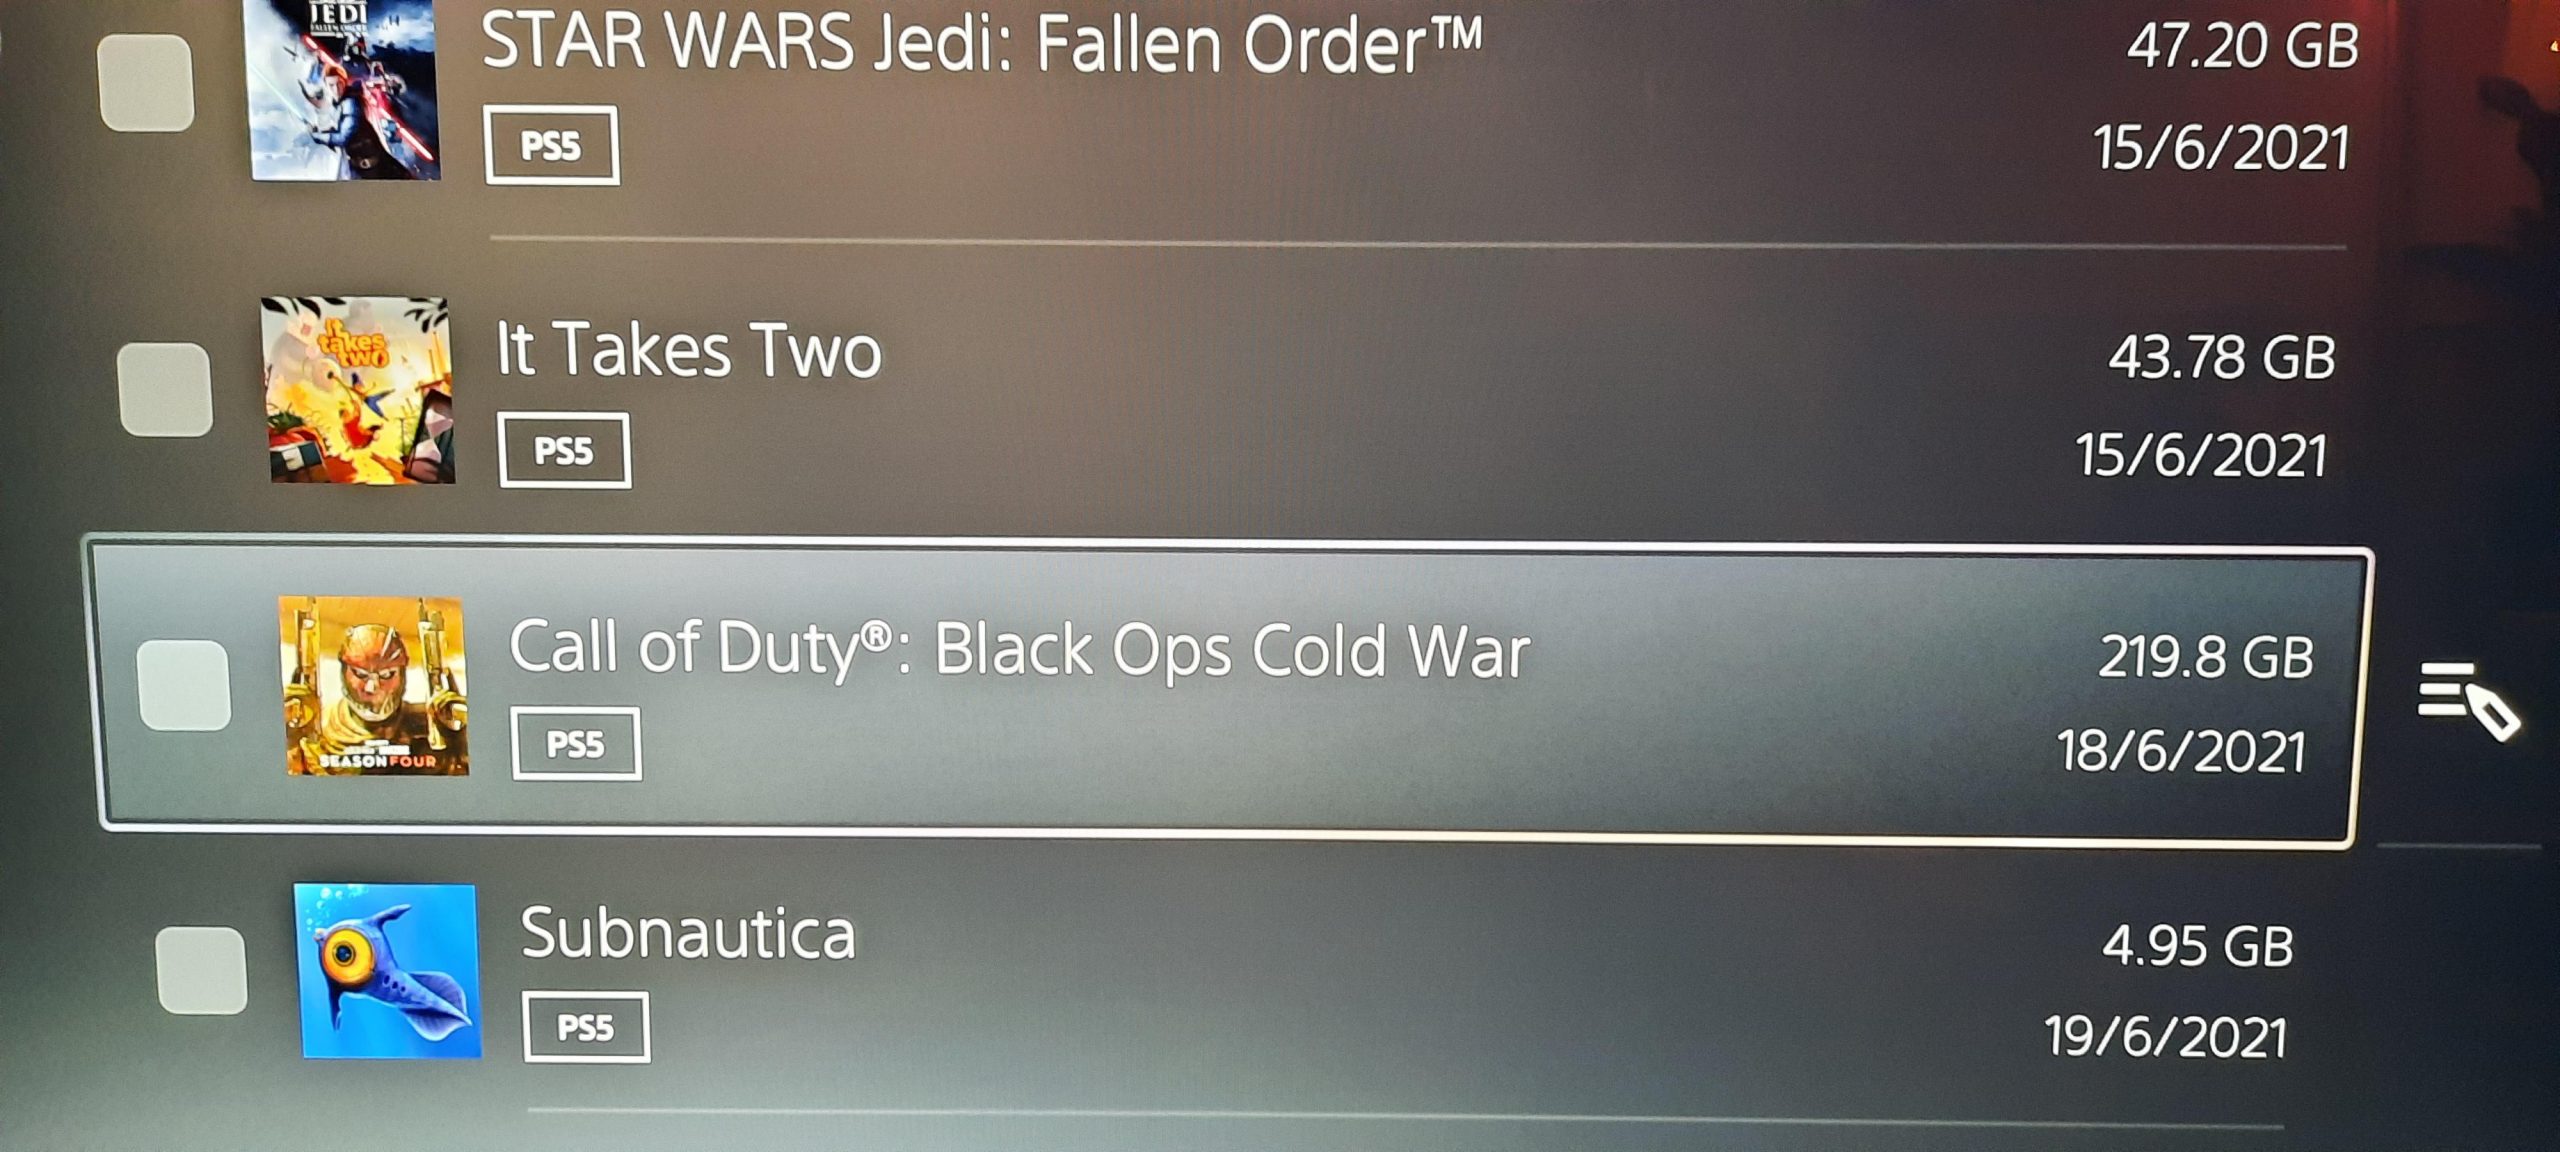 Call of Duty Black Ops Cold War දැන් කොන්සෝලවල 200 GB ඉක්මවයි